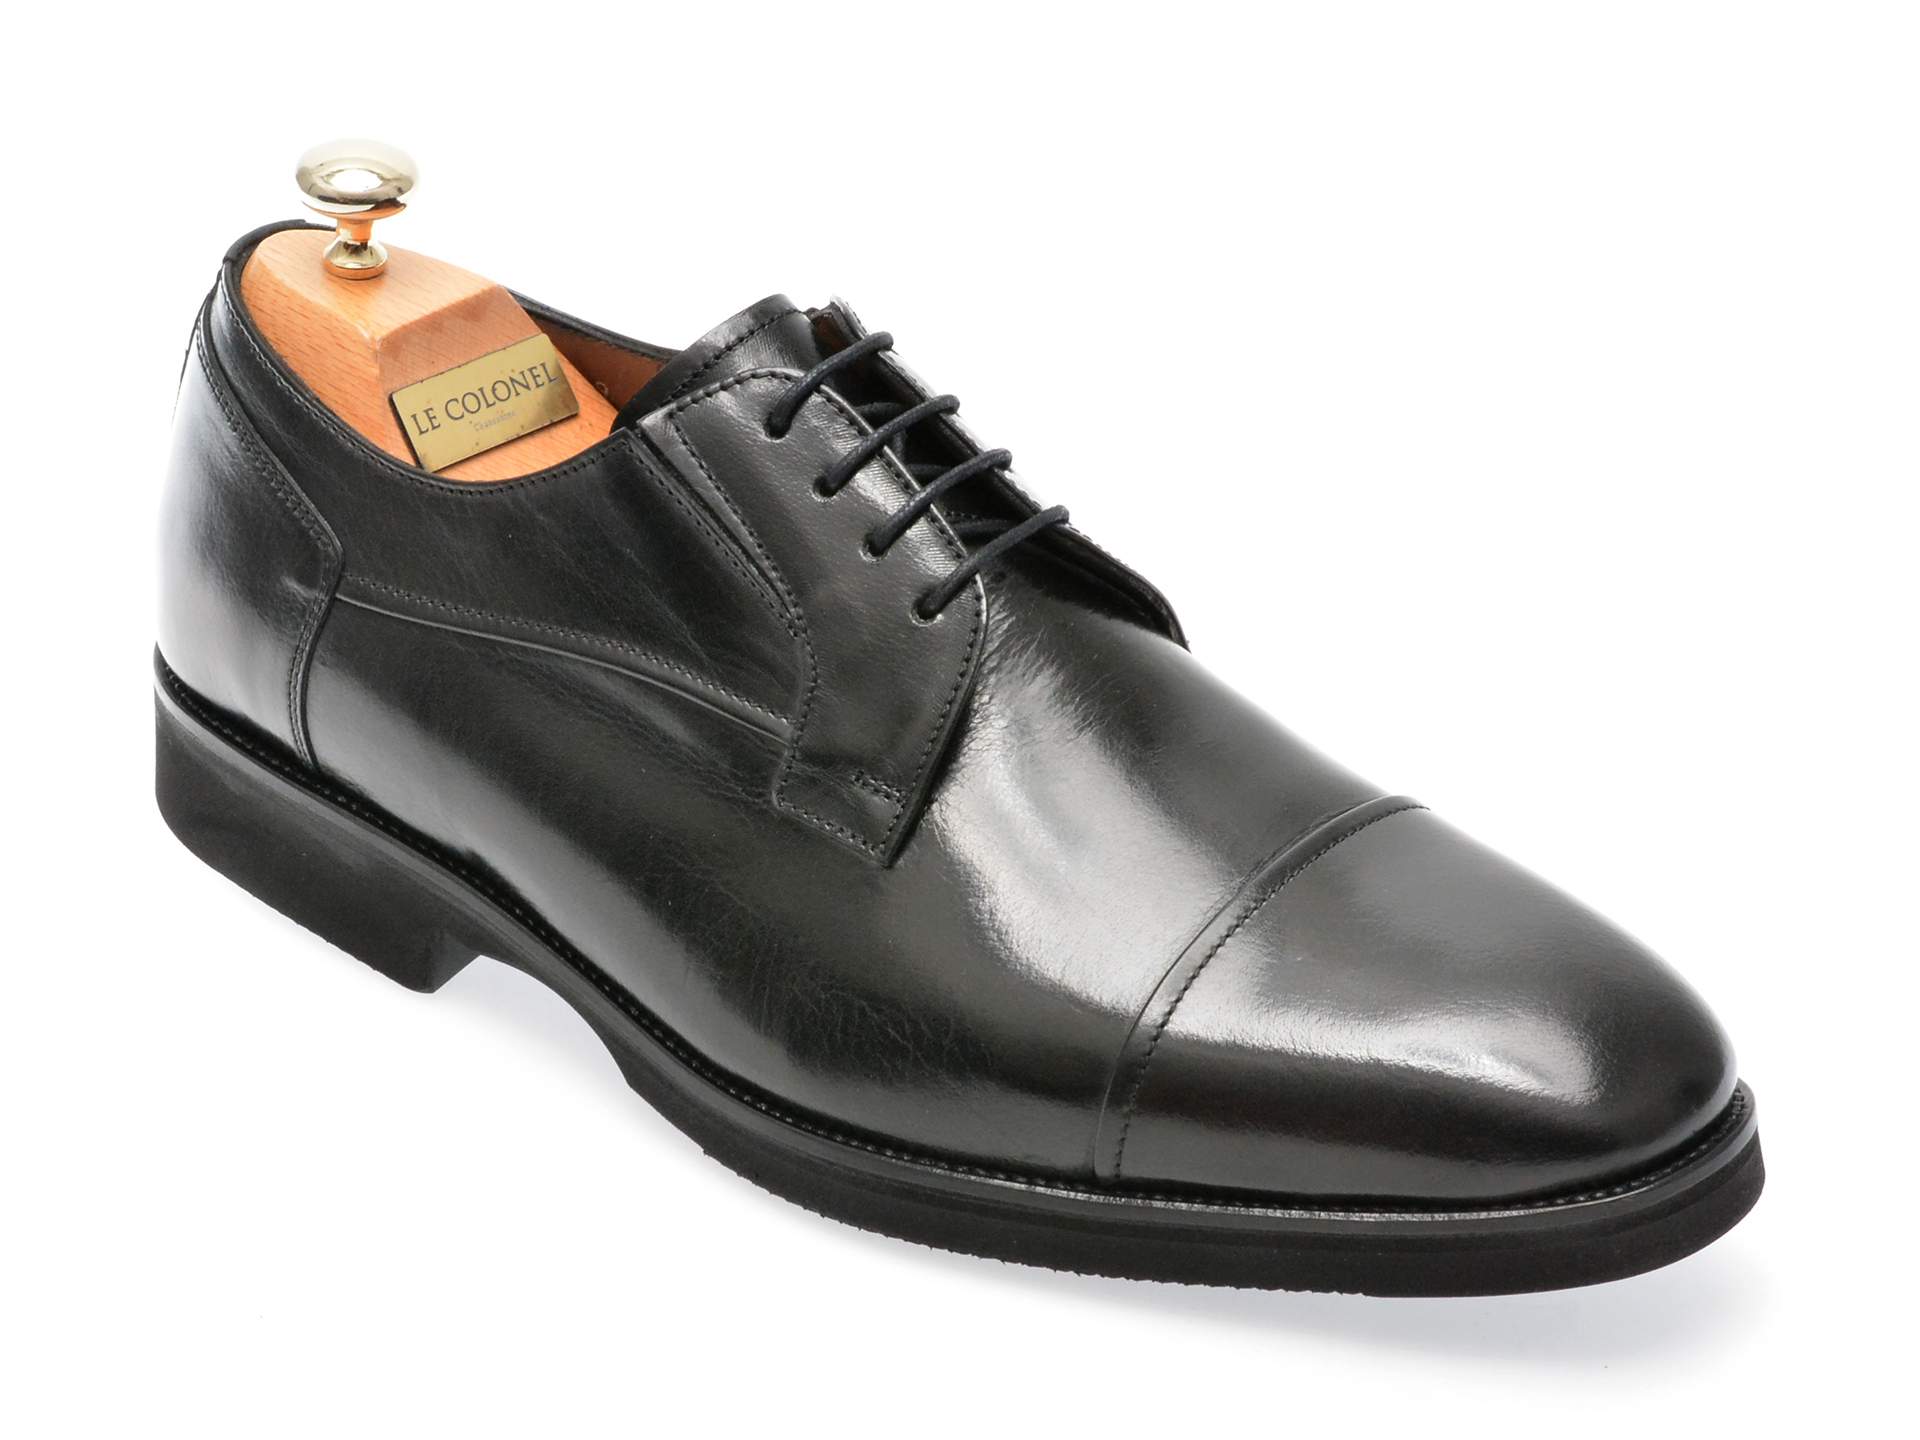 Pantofi LE COLONEL negri, 48409, din piele naturala /barbati/pantofi